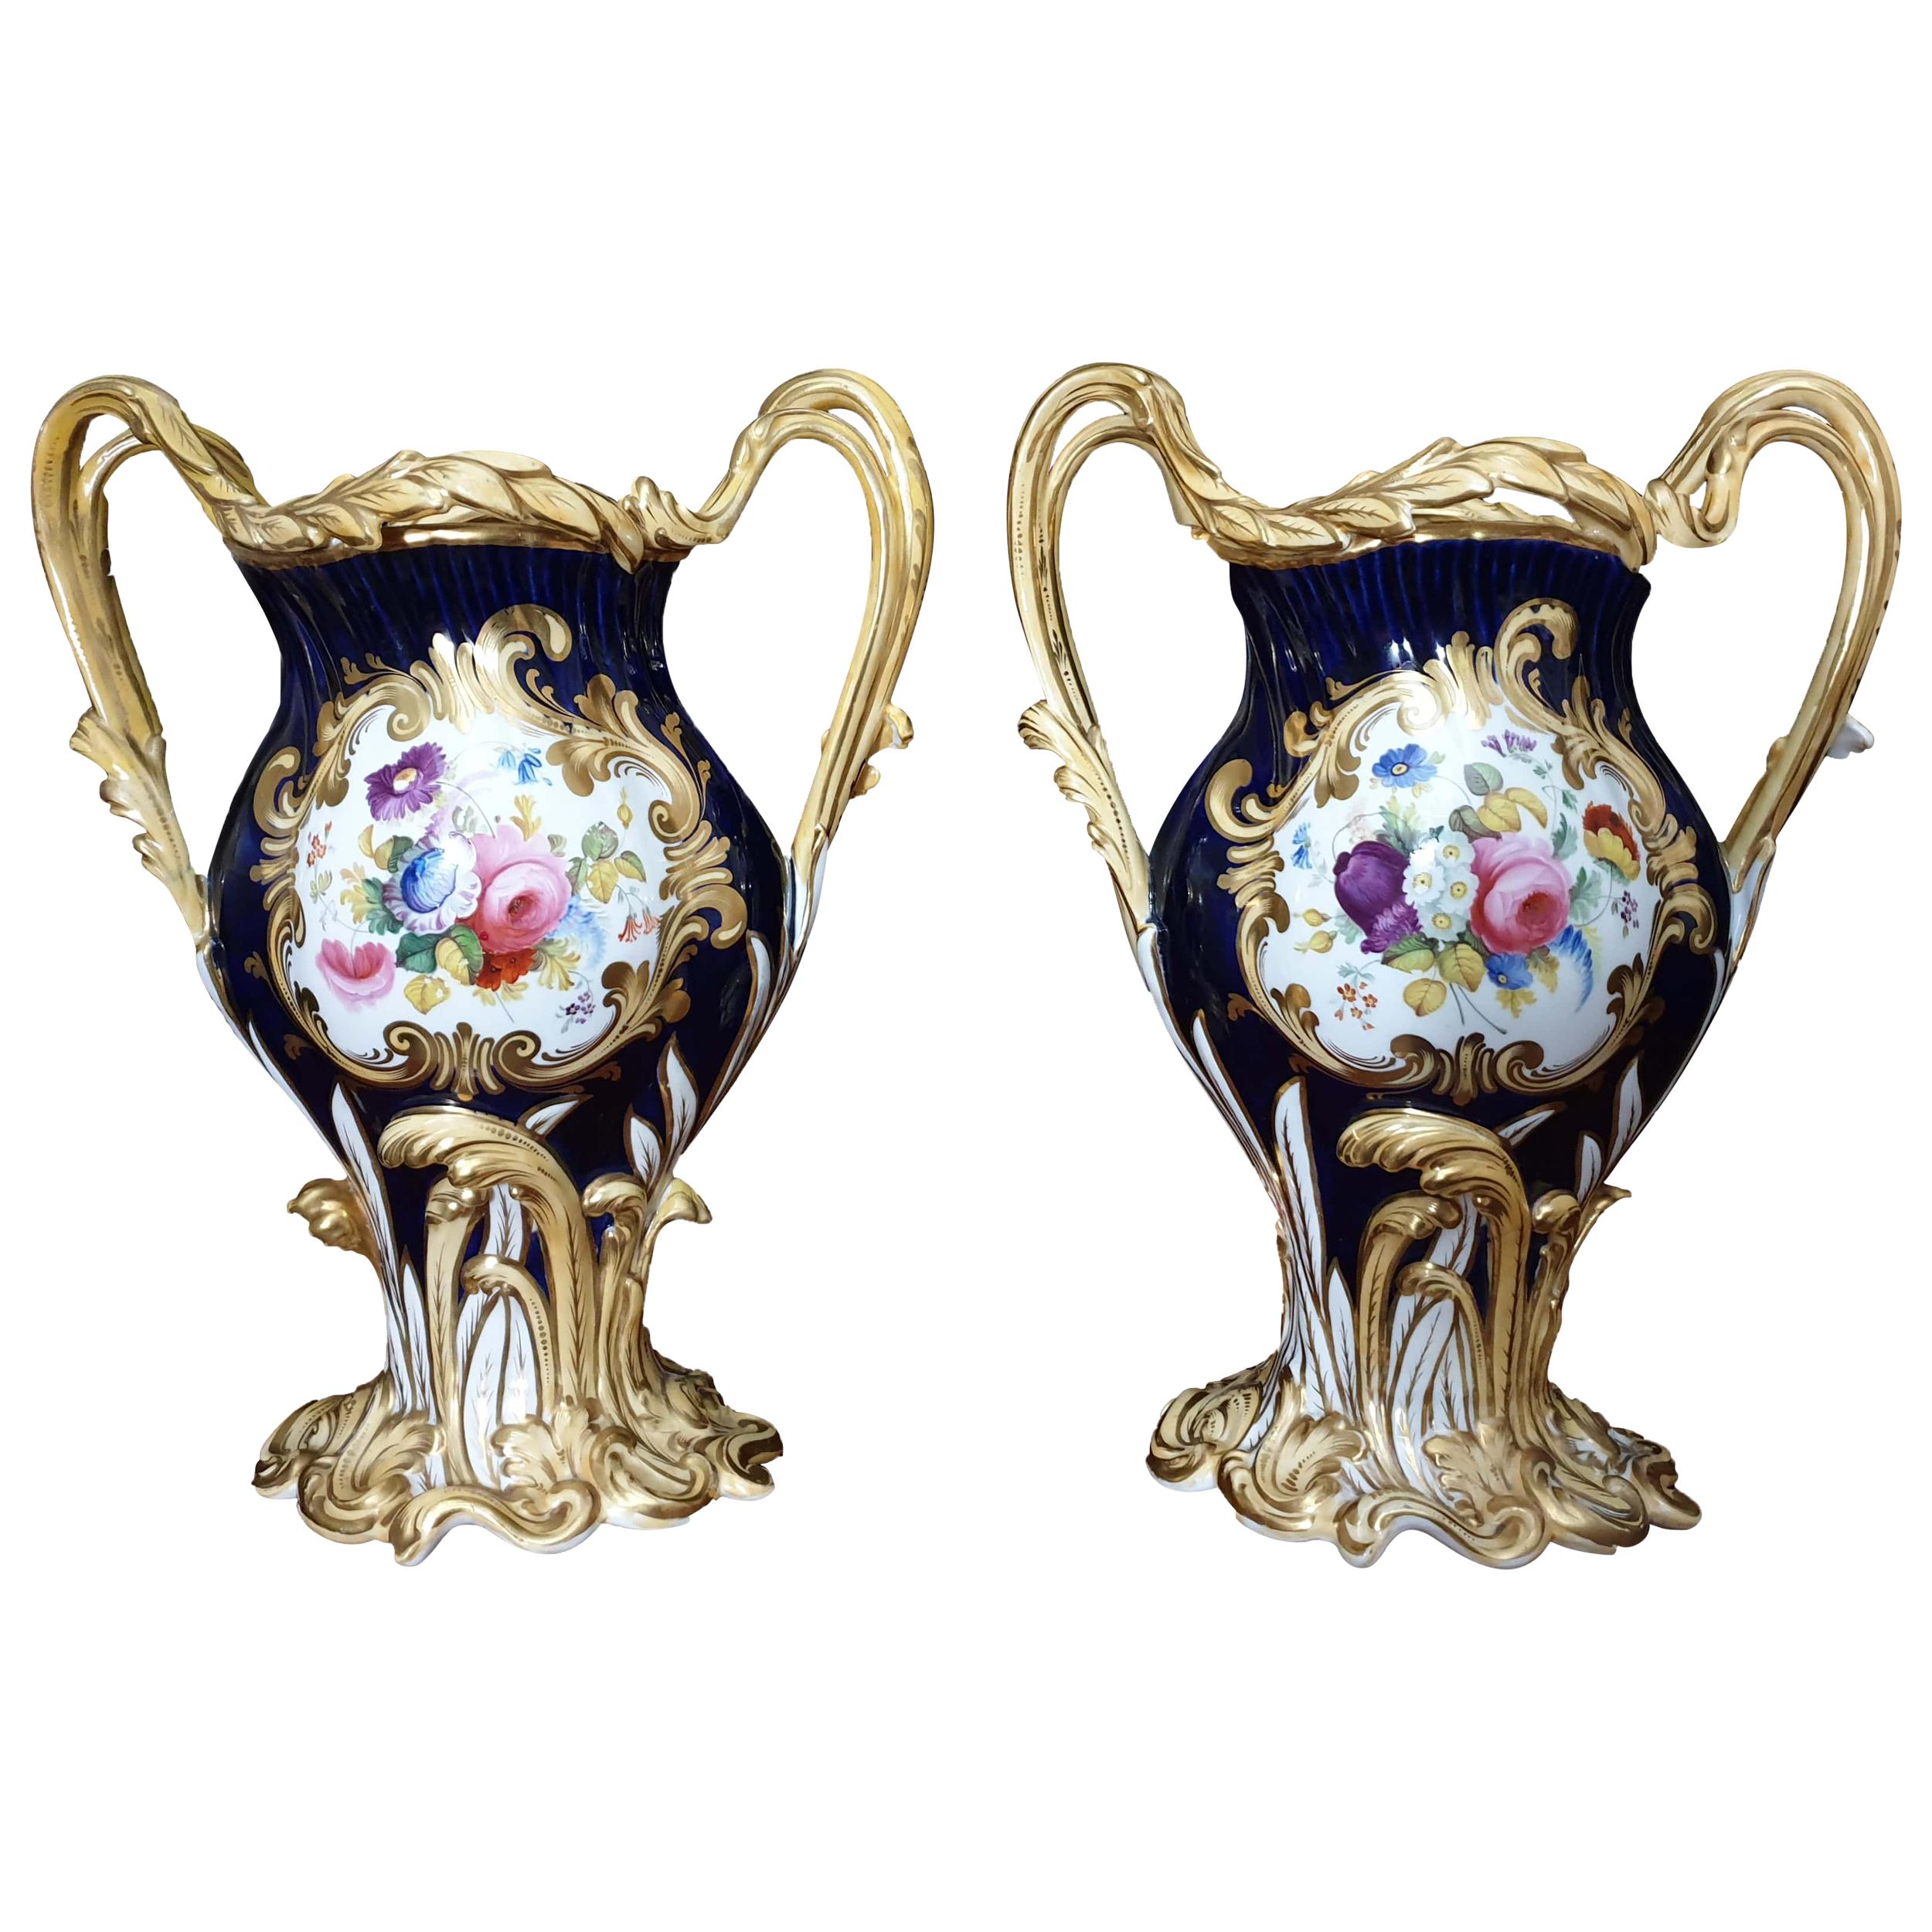 English H & R Daniel Floral Laurels Hand painted 19th Century Decorative Vases For Sale